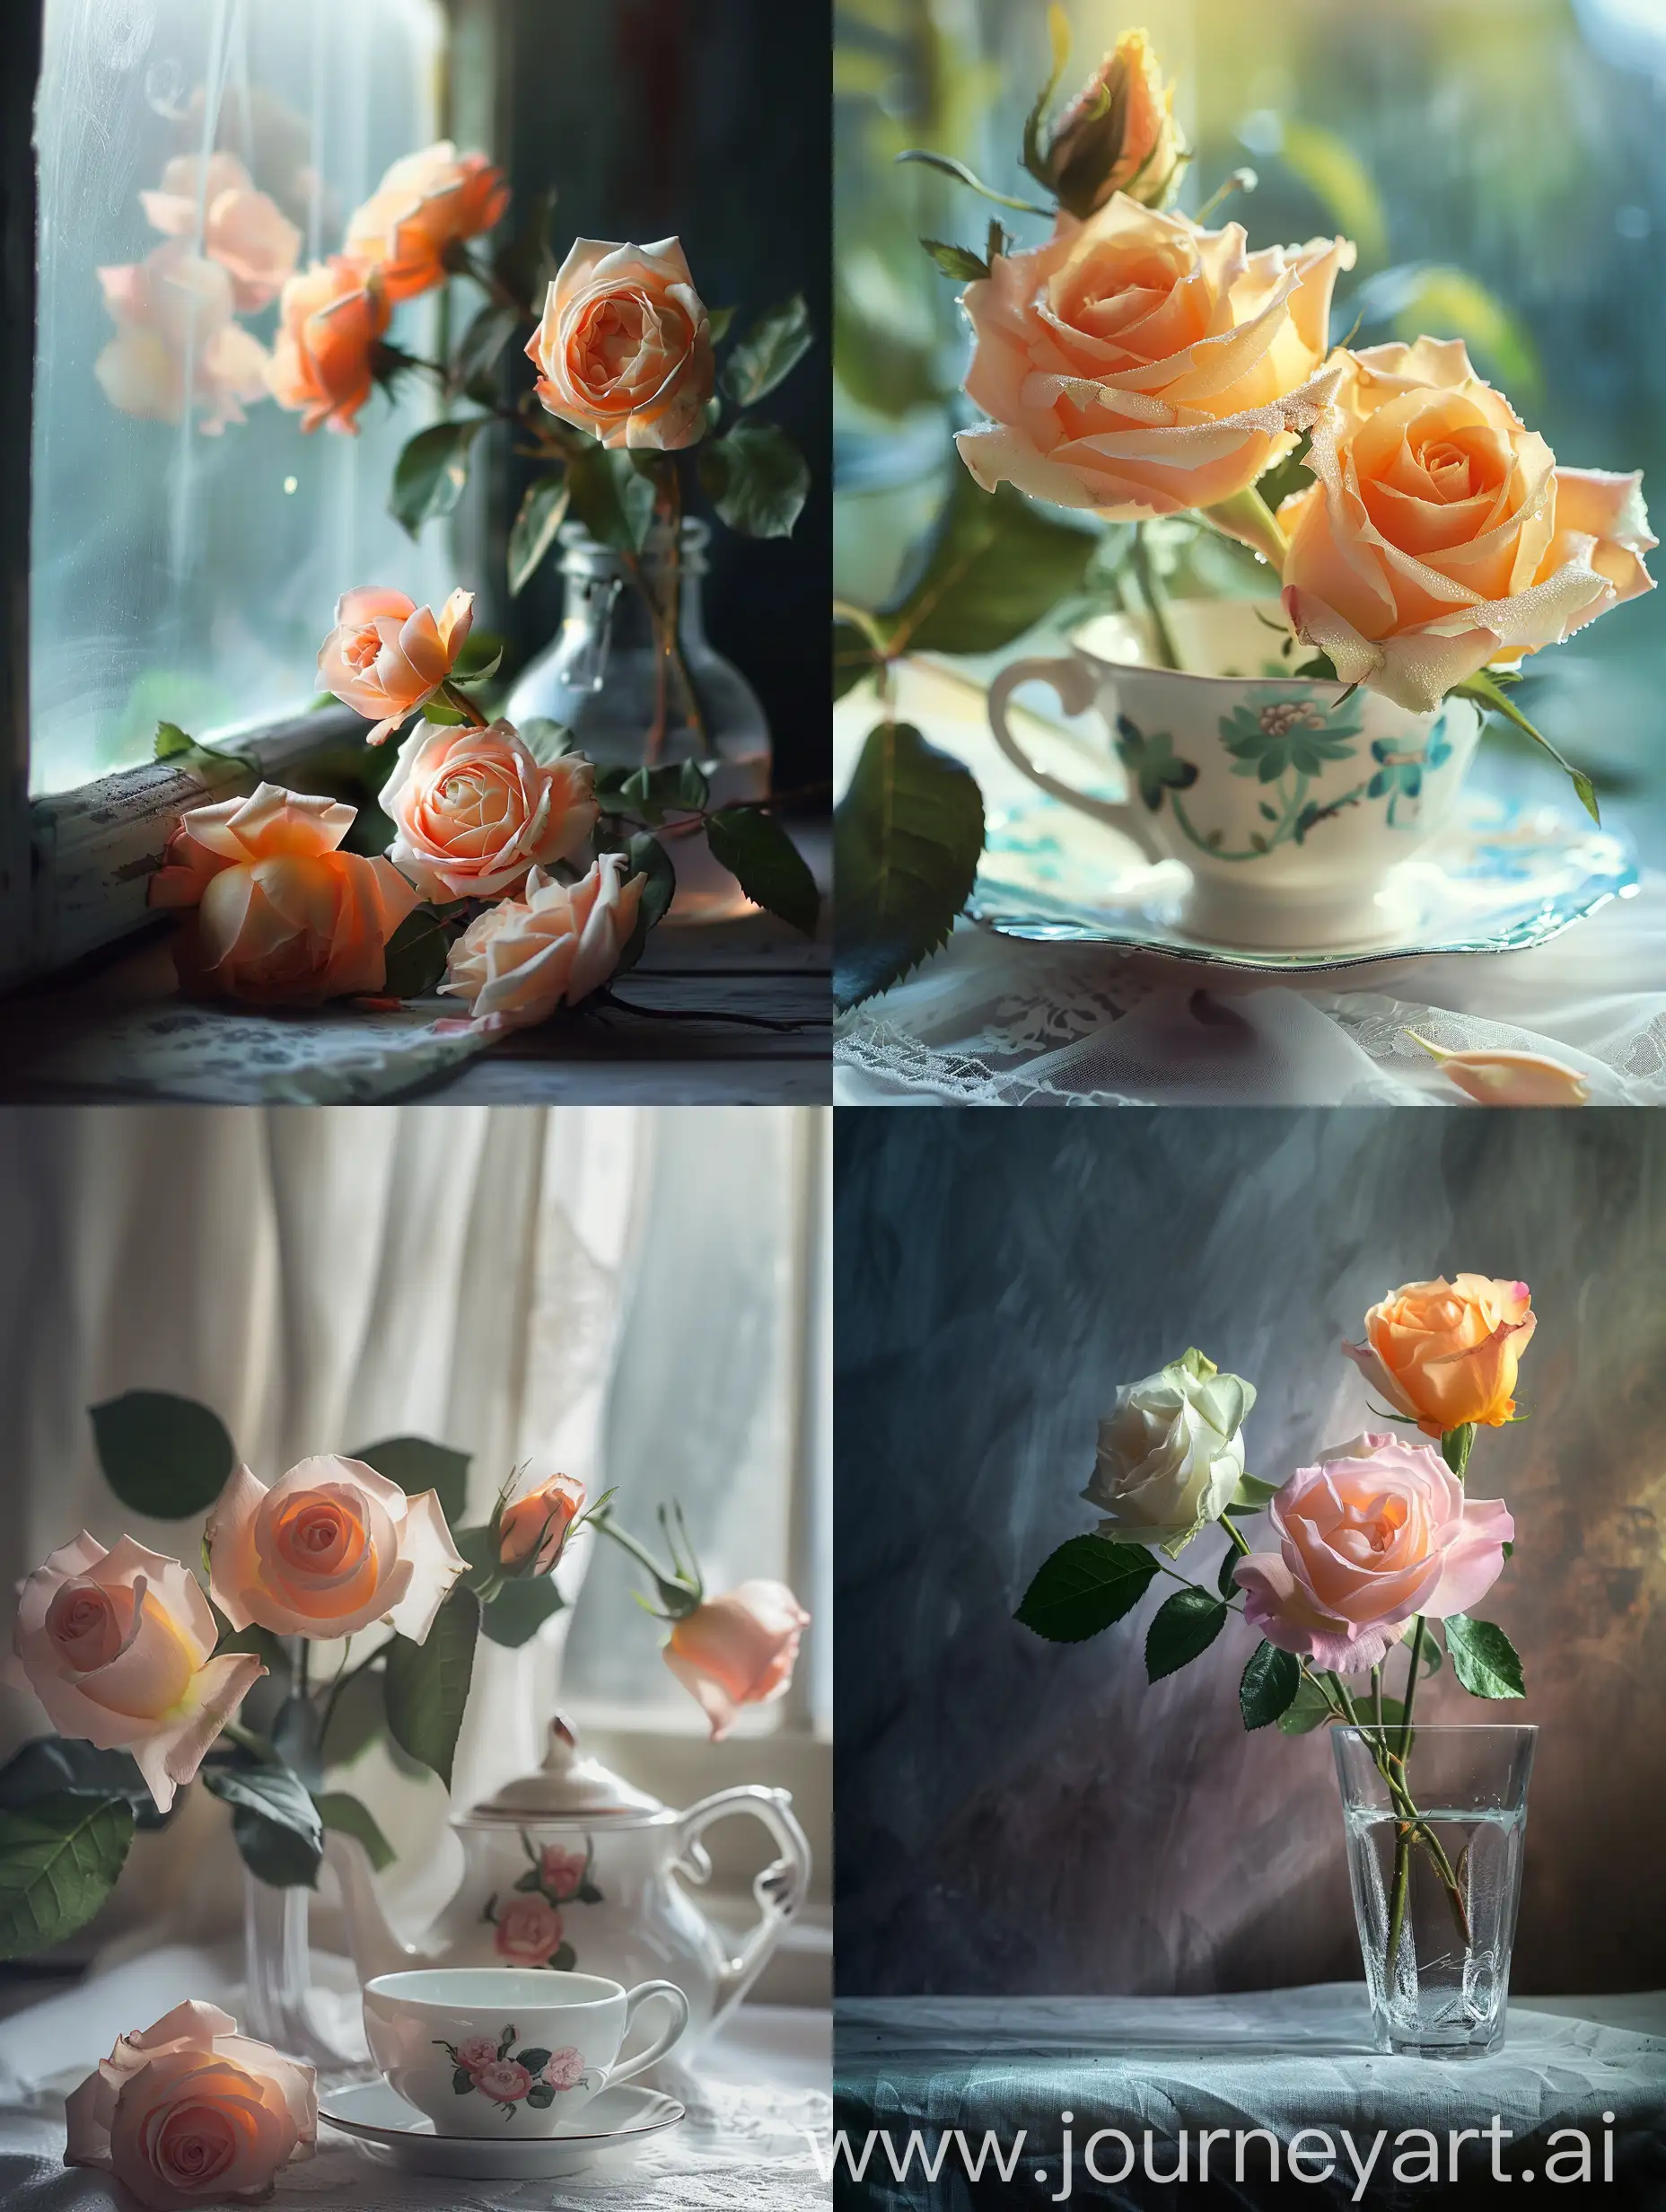 Tranquil-Still-Life-with-Light-Tea-Roses-Elegant-Studio-Photography-in-High-Resolution-4K